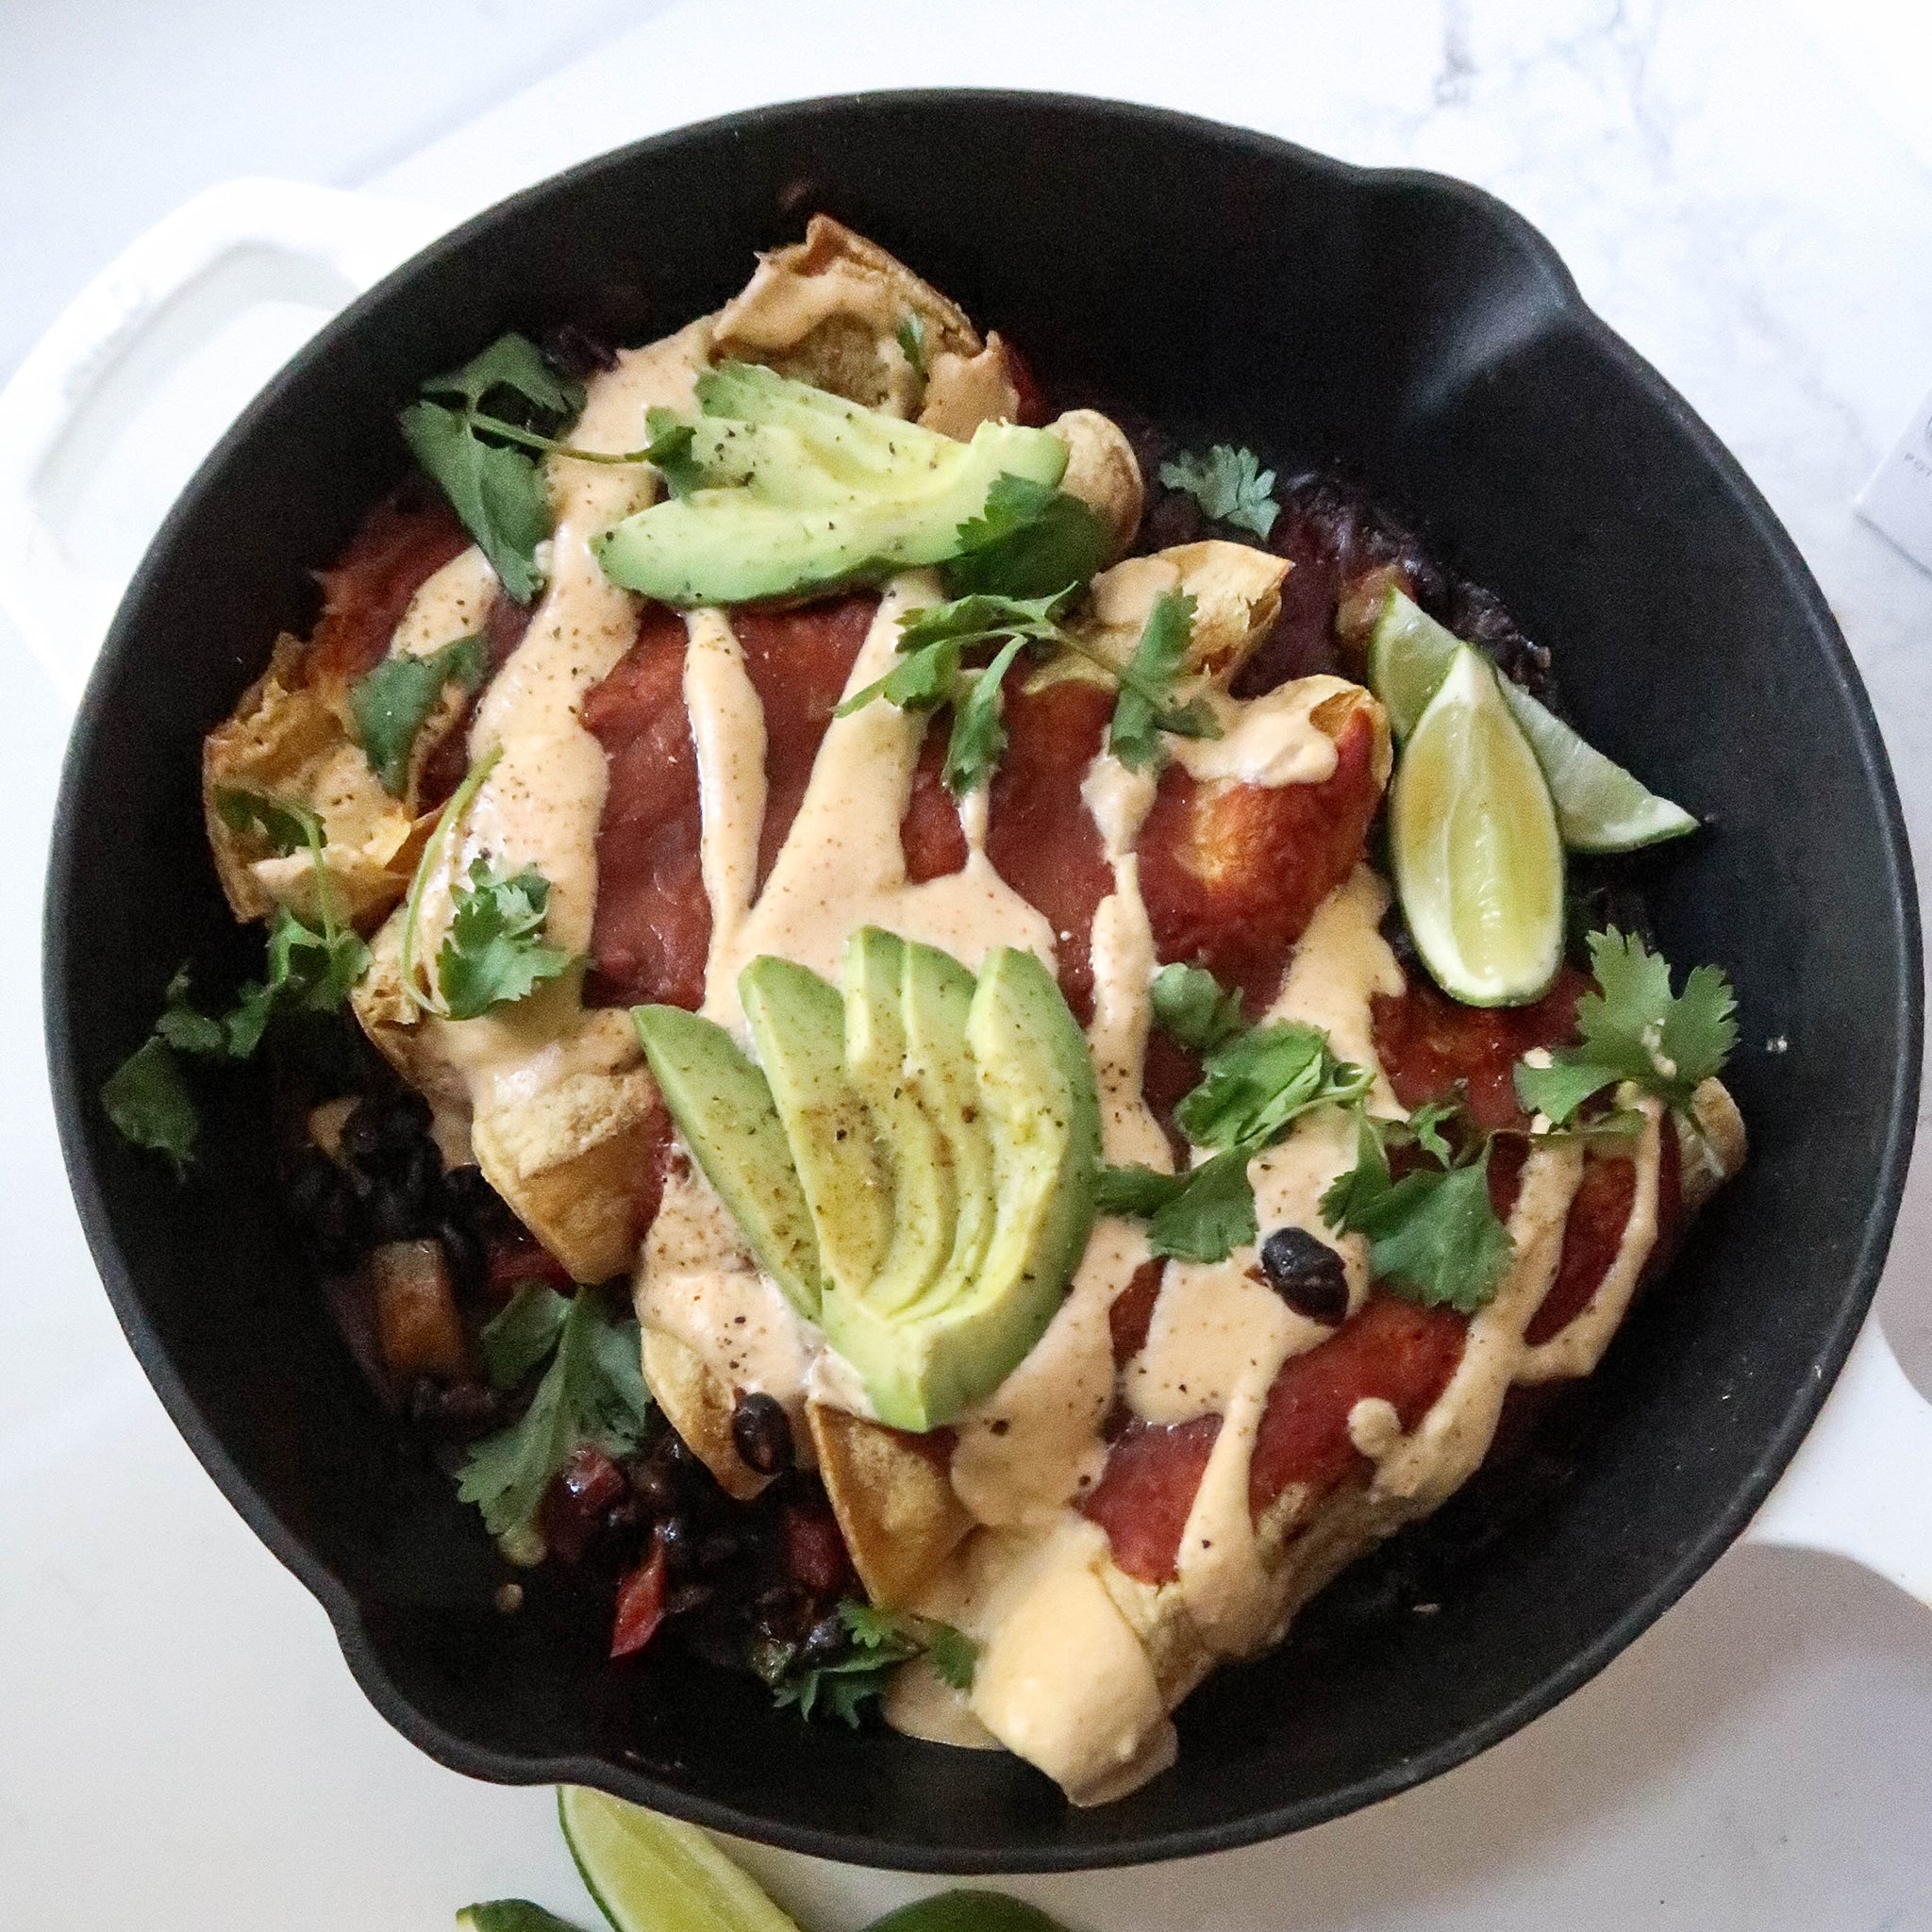 Skillet Veggie Enchiladas with Chipotle Cashew Queso